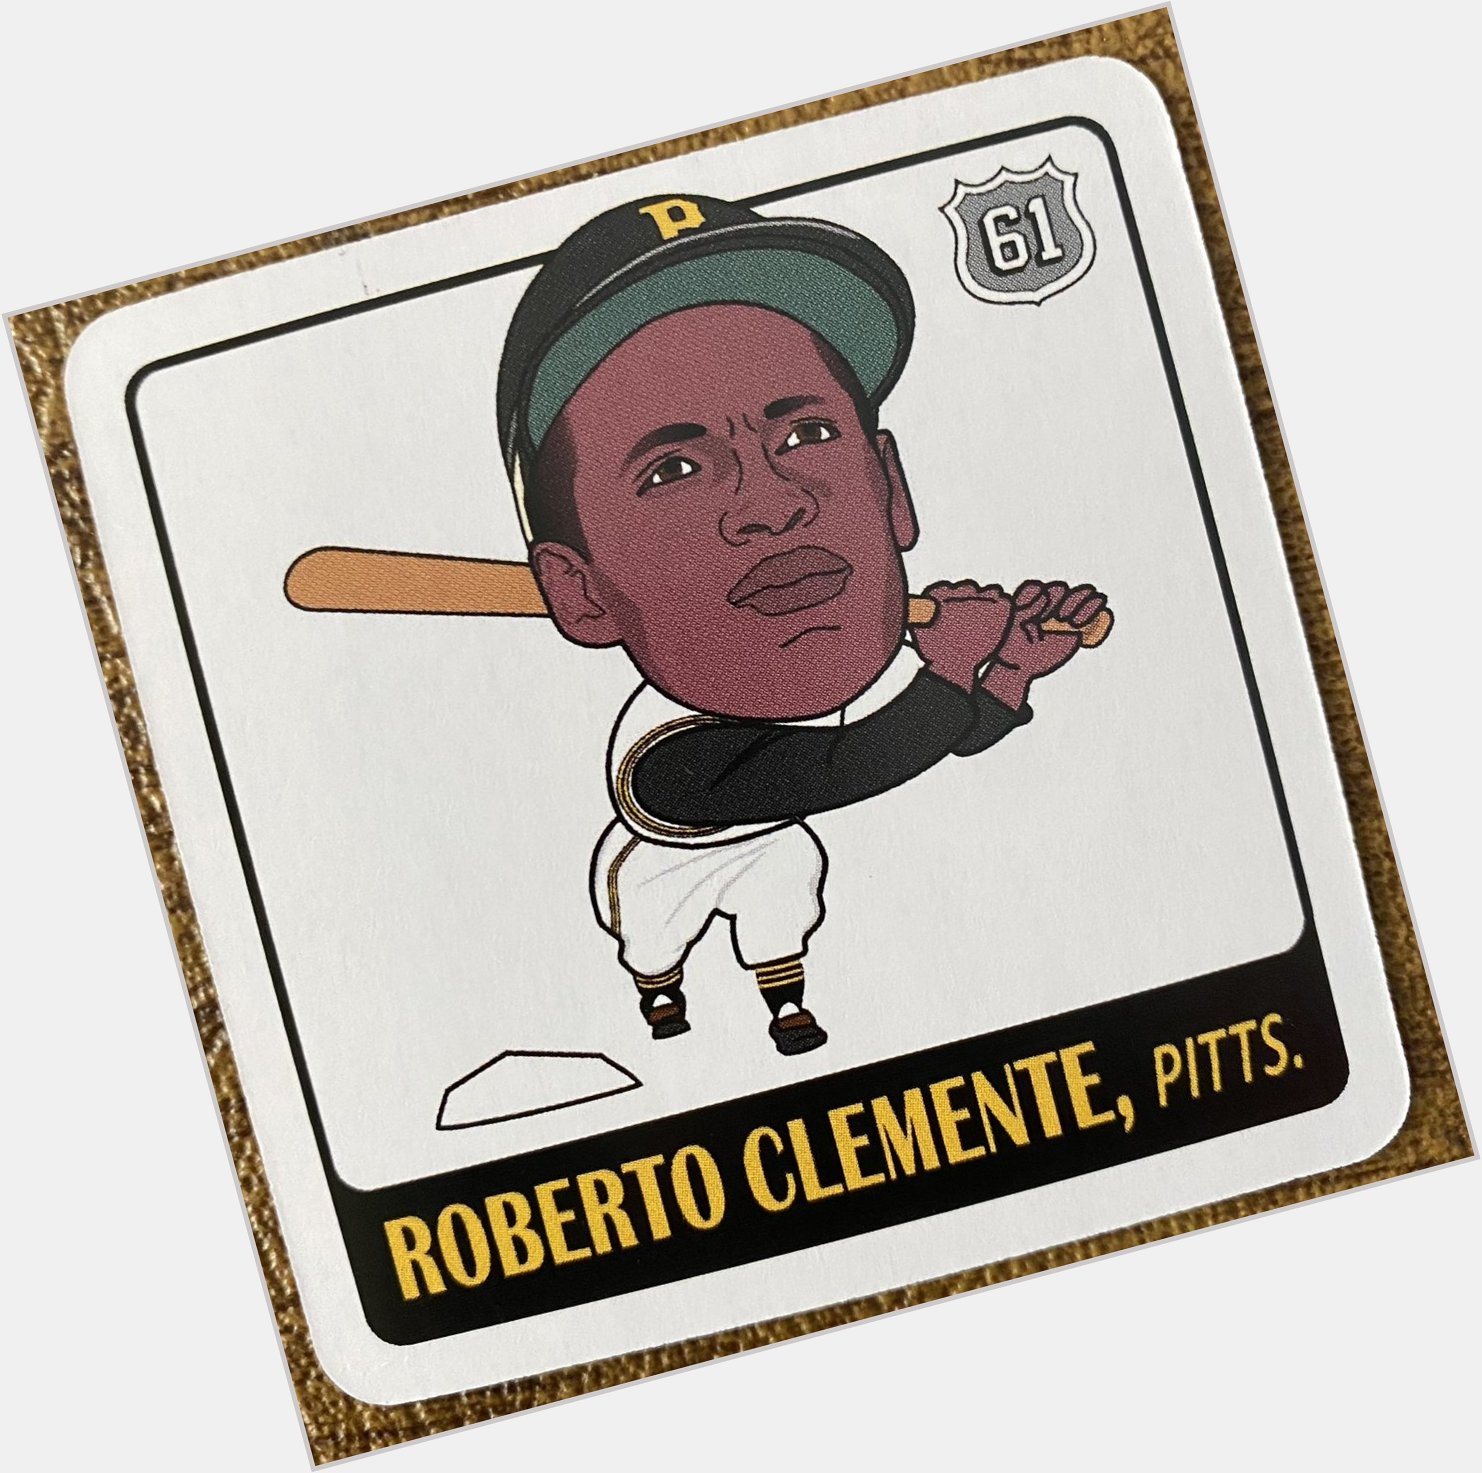 Happy birthday to Roberto Clemente! 